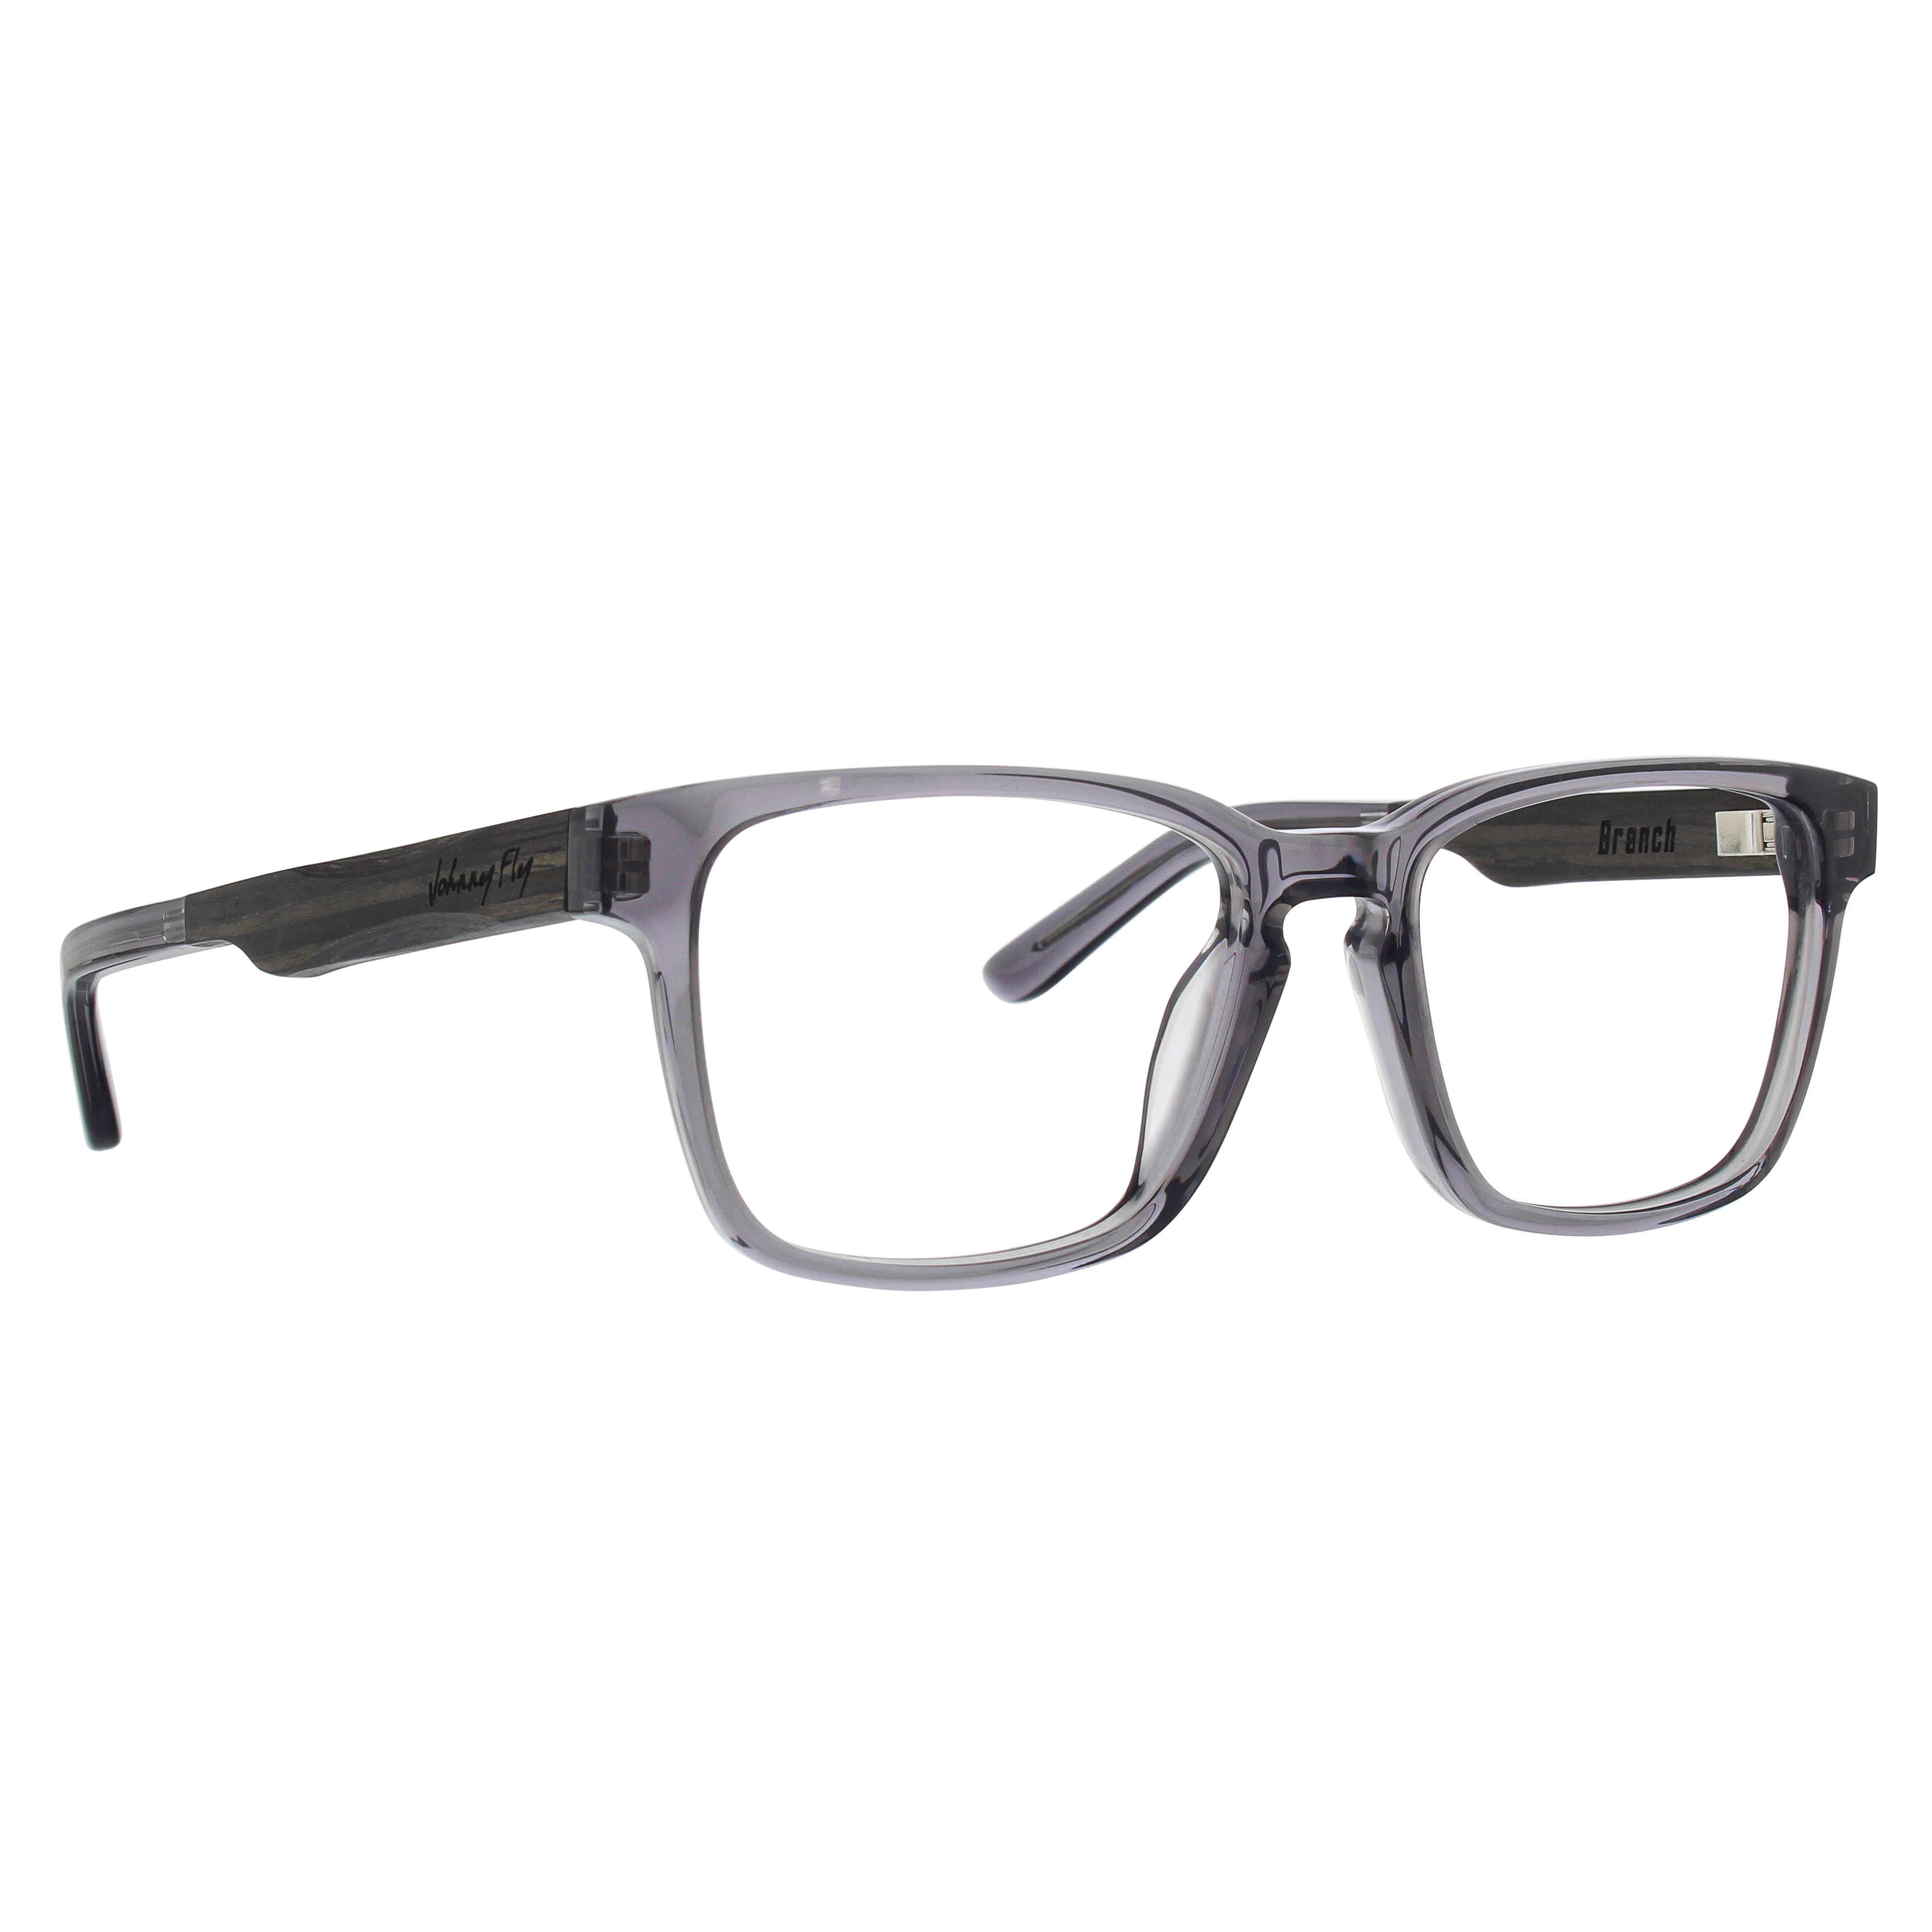 Louis Vuitton LV Star Cat Eye Sunglasses Black Metal. Size U